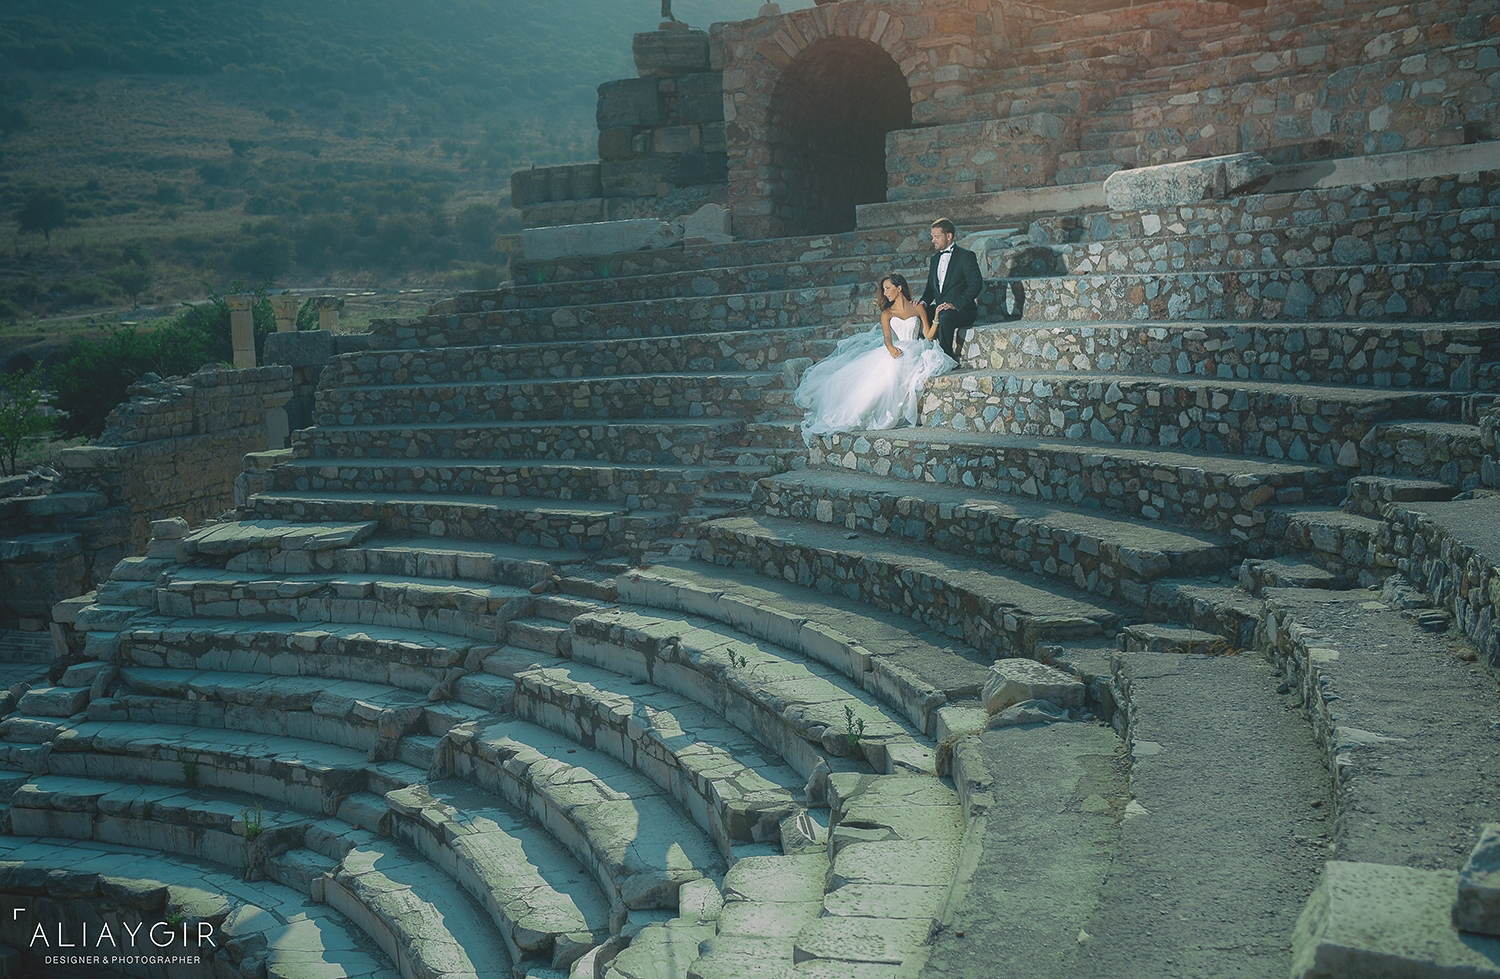 Efes Antik Kenti, Efes Arkeoloji Müzesi Düğün Fotoğrafı, İzmir Düğün Fotoğrafı, Düğün fotoğrafçısı, Düğün Fotoğrafları, Efes harabeleri